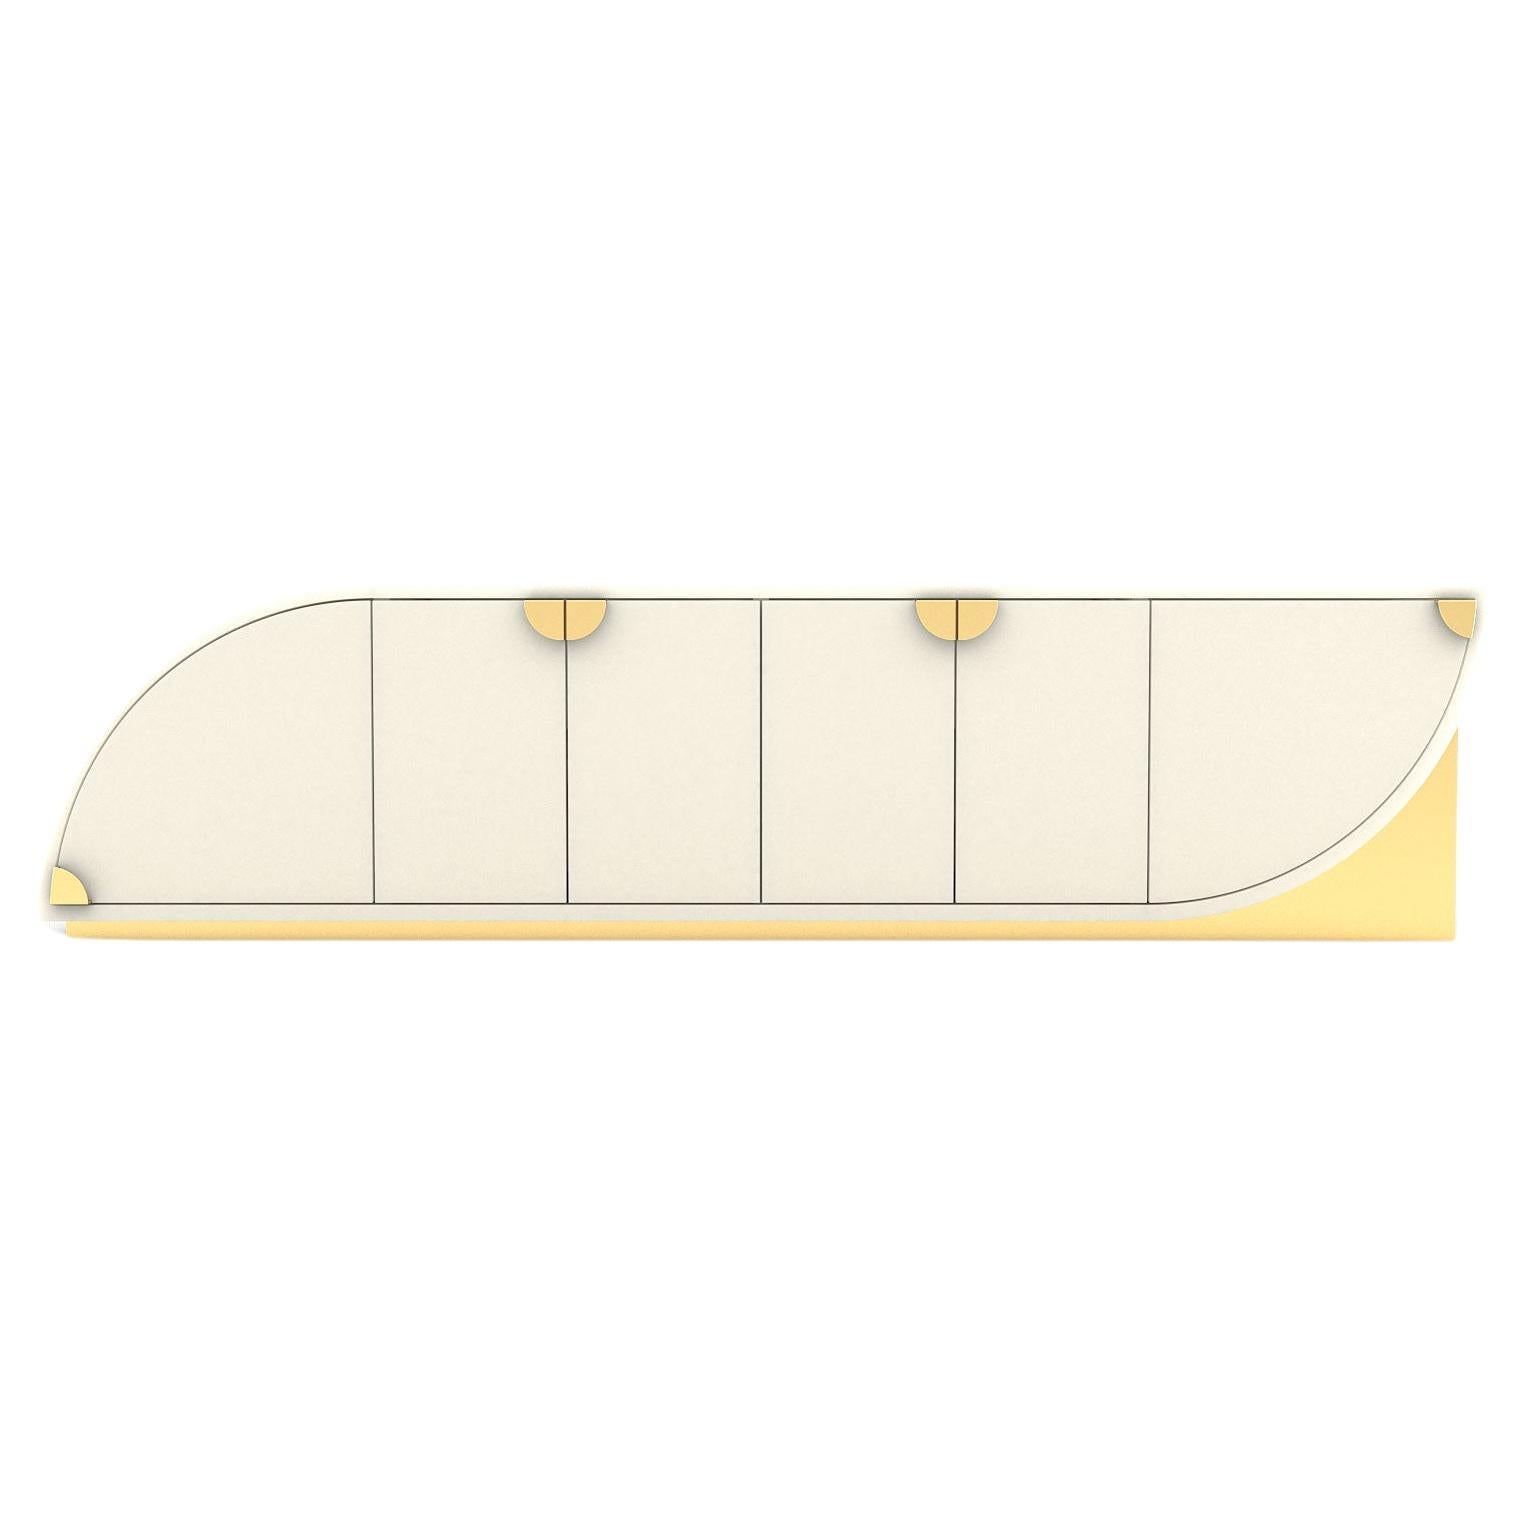 Delta Sideboard - Modernes Sideboard aus poliertem weißem Lack mit Messingdetails